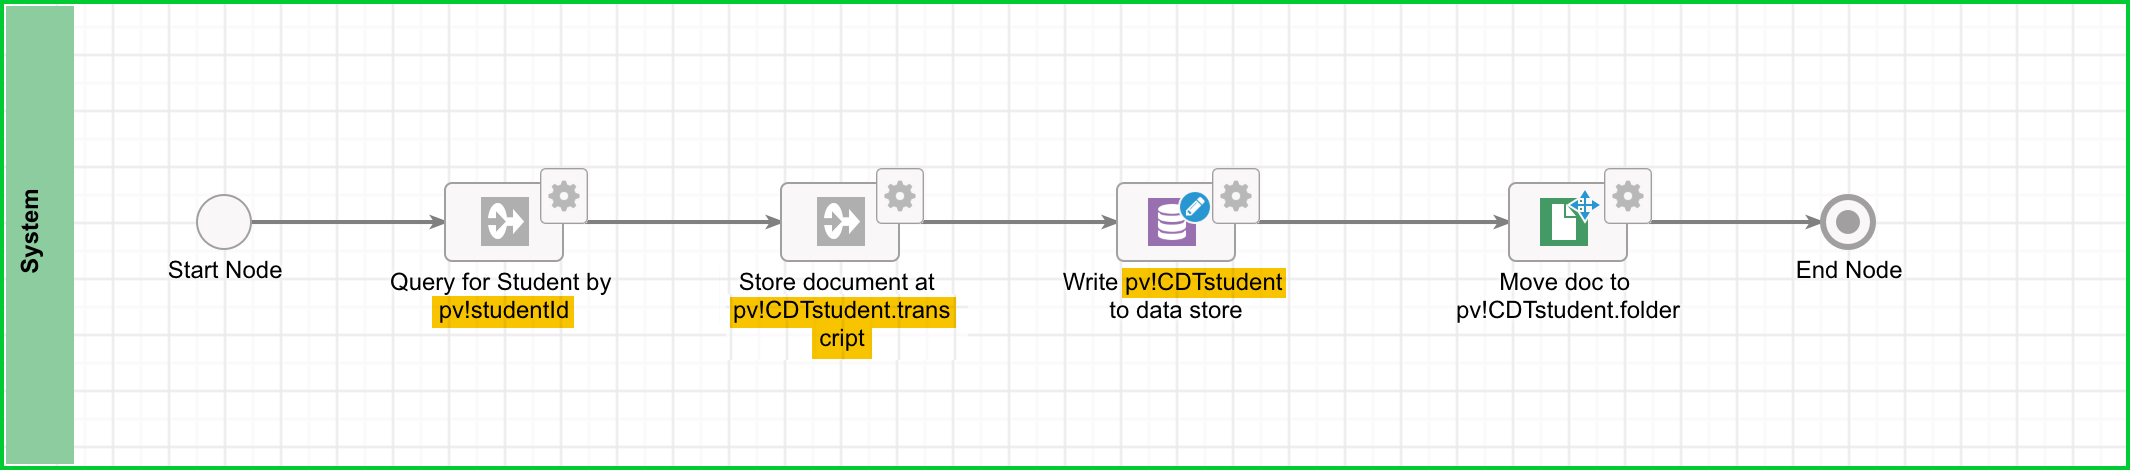 Upload Document Process Model